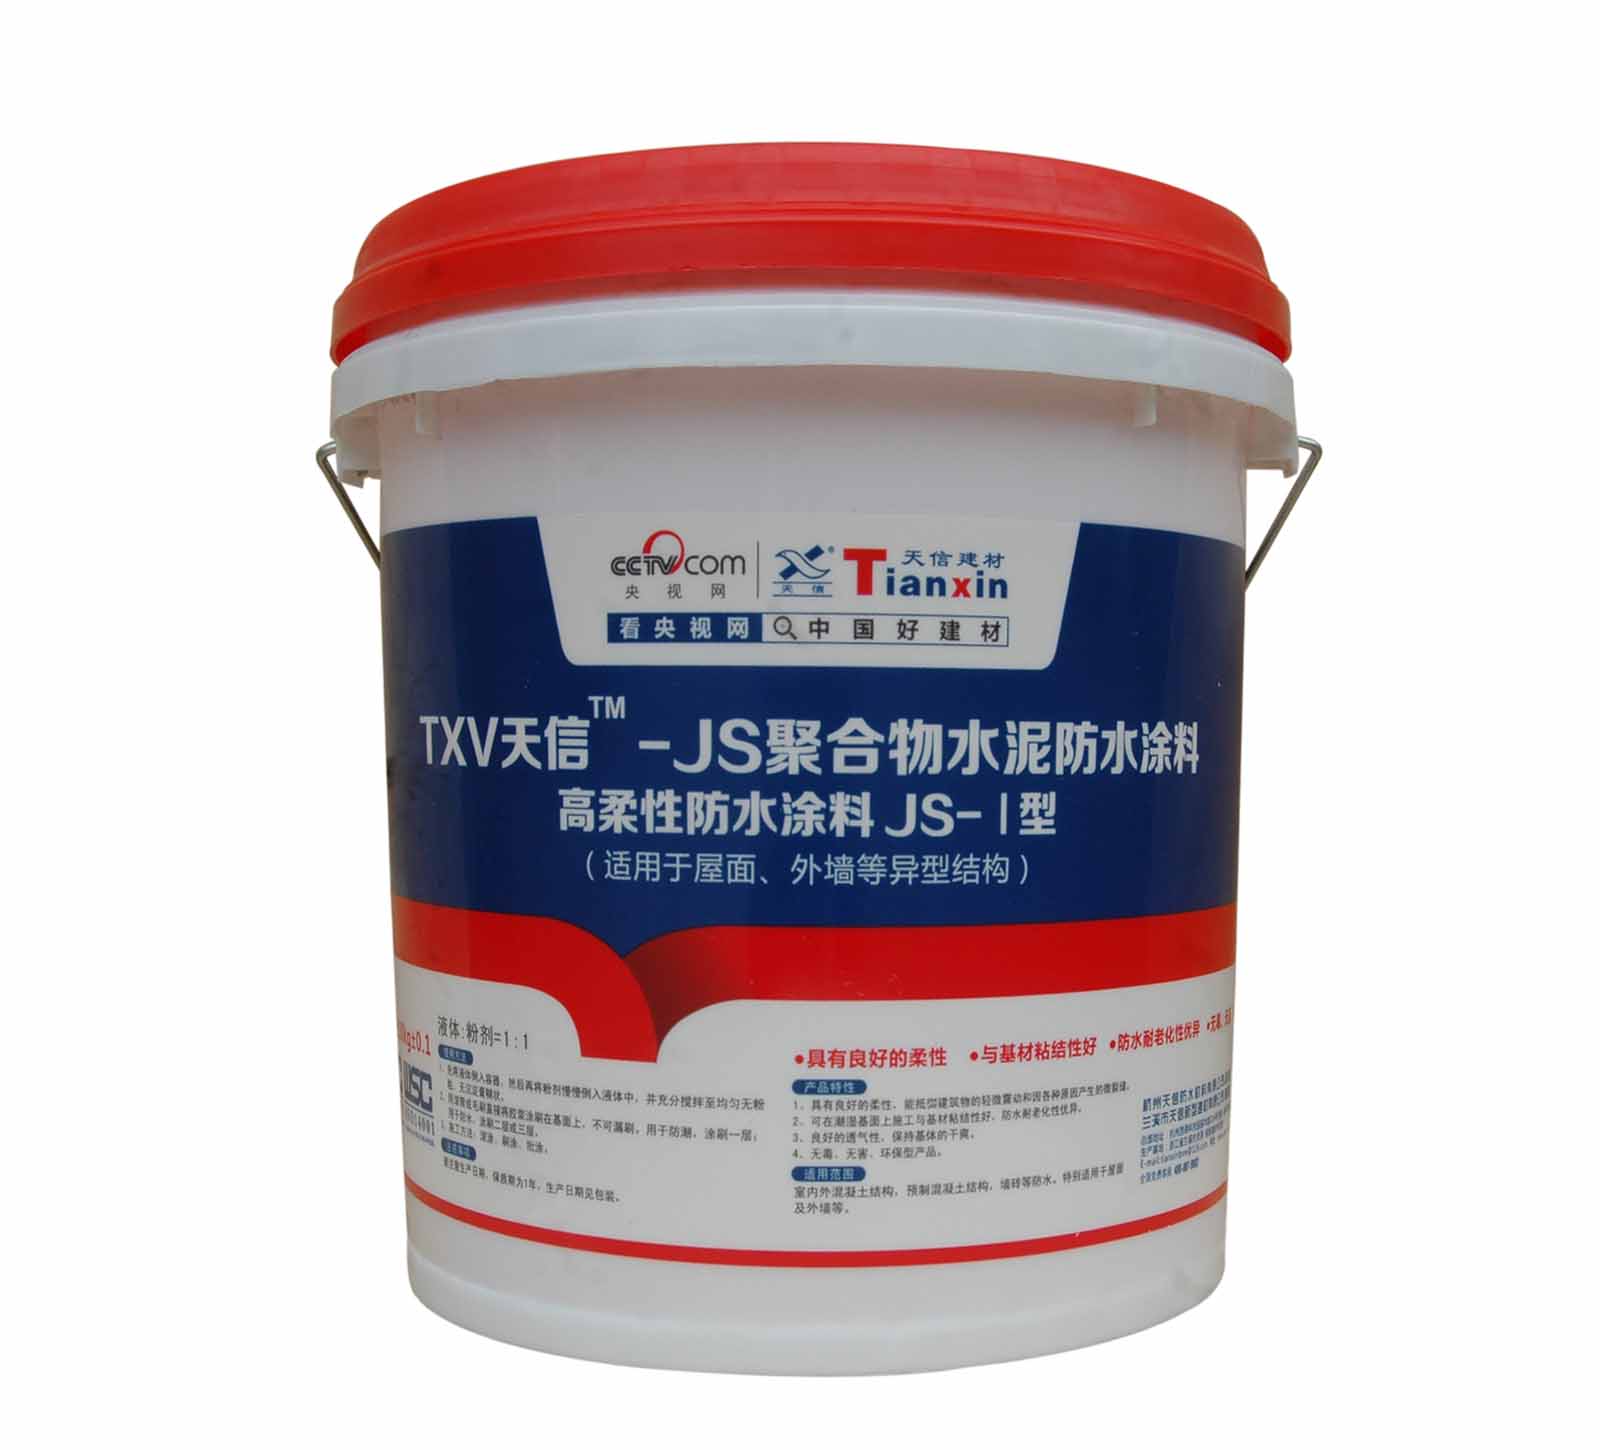 JS-II型聚合物防水涂料天信JS-II型聚合物防水涂料 JS-II型聚合物防水涂料